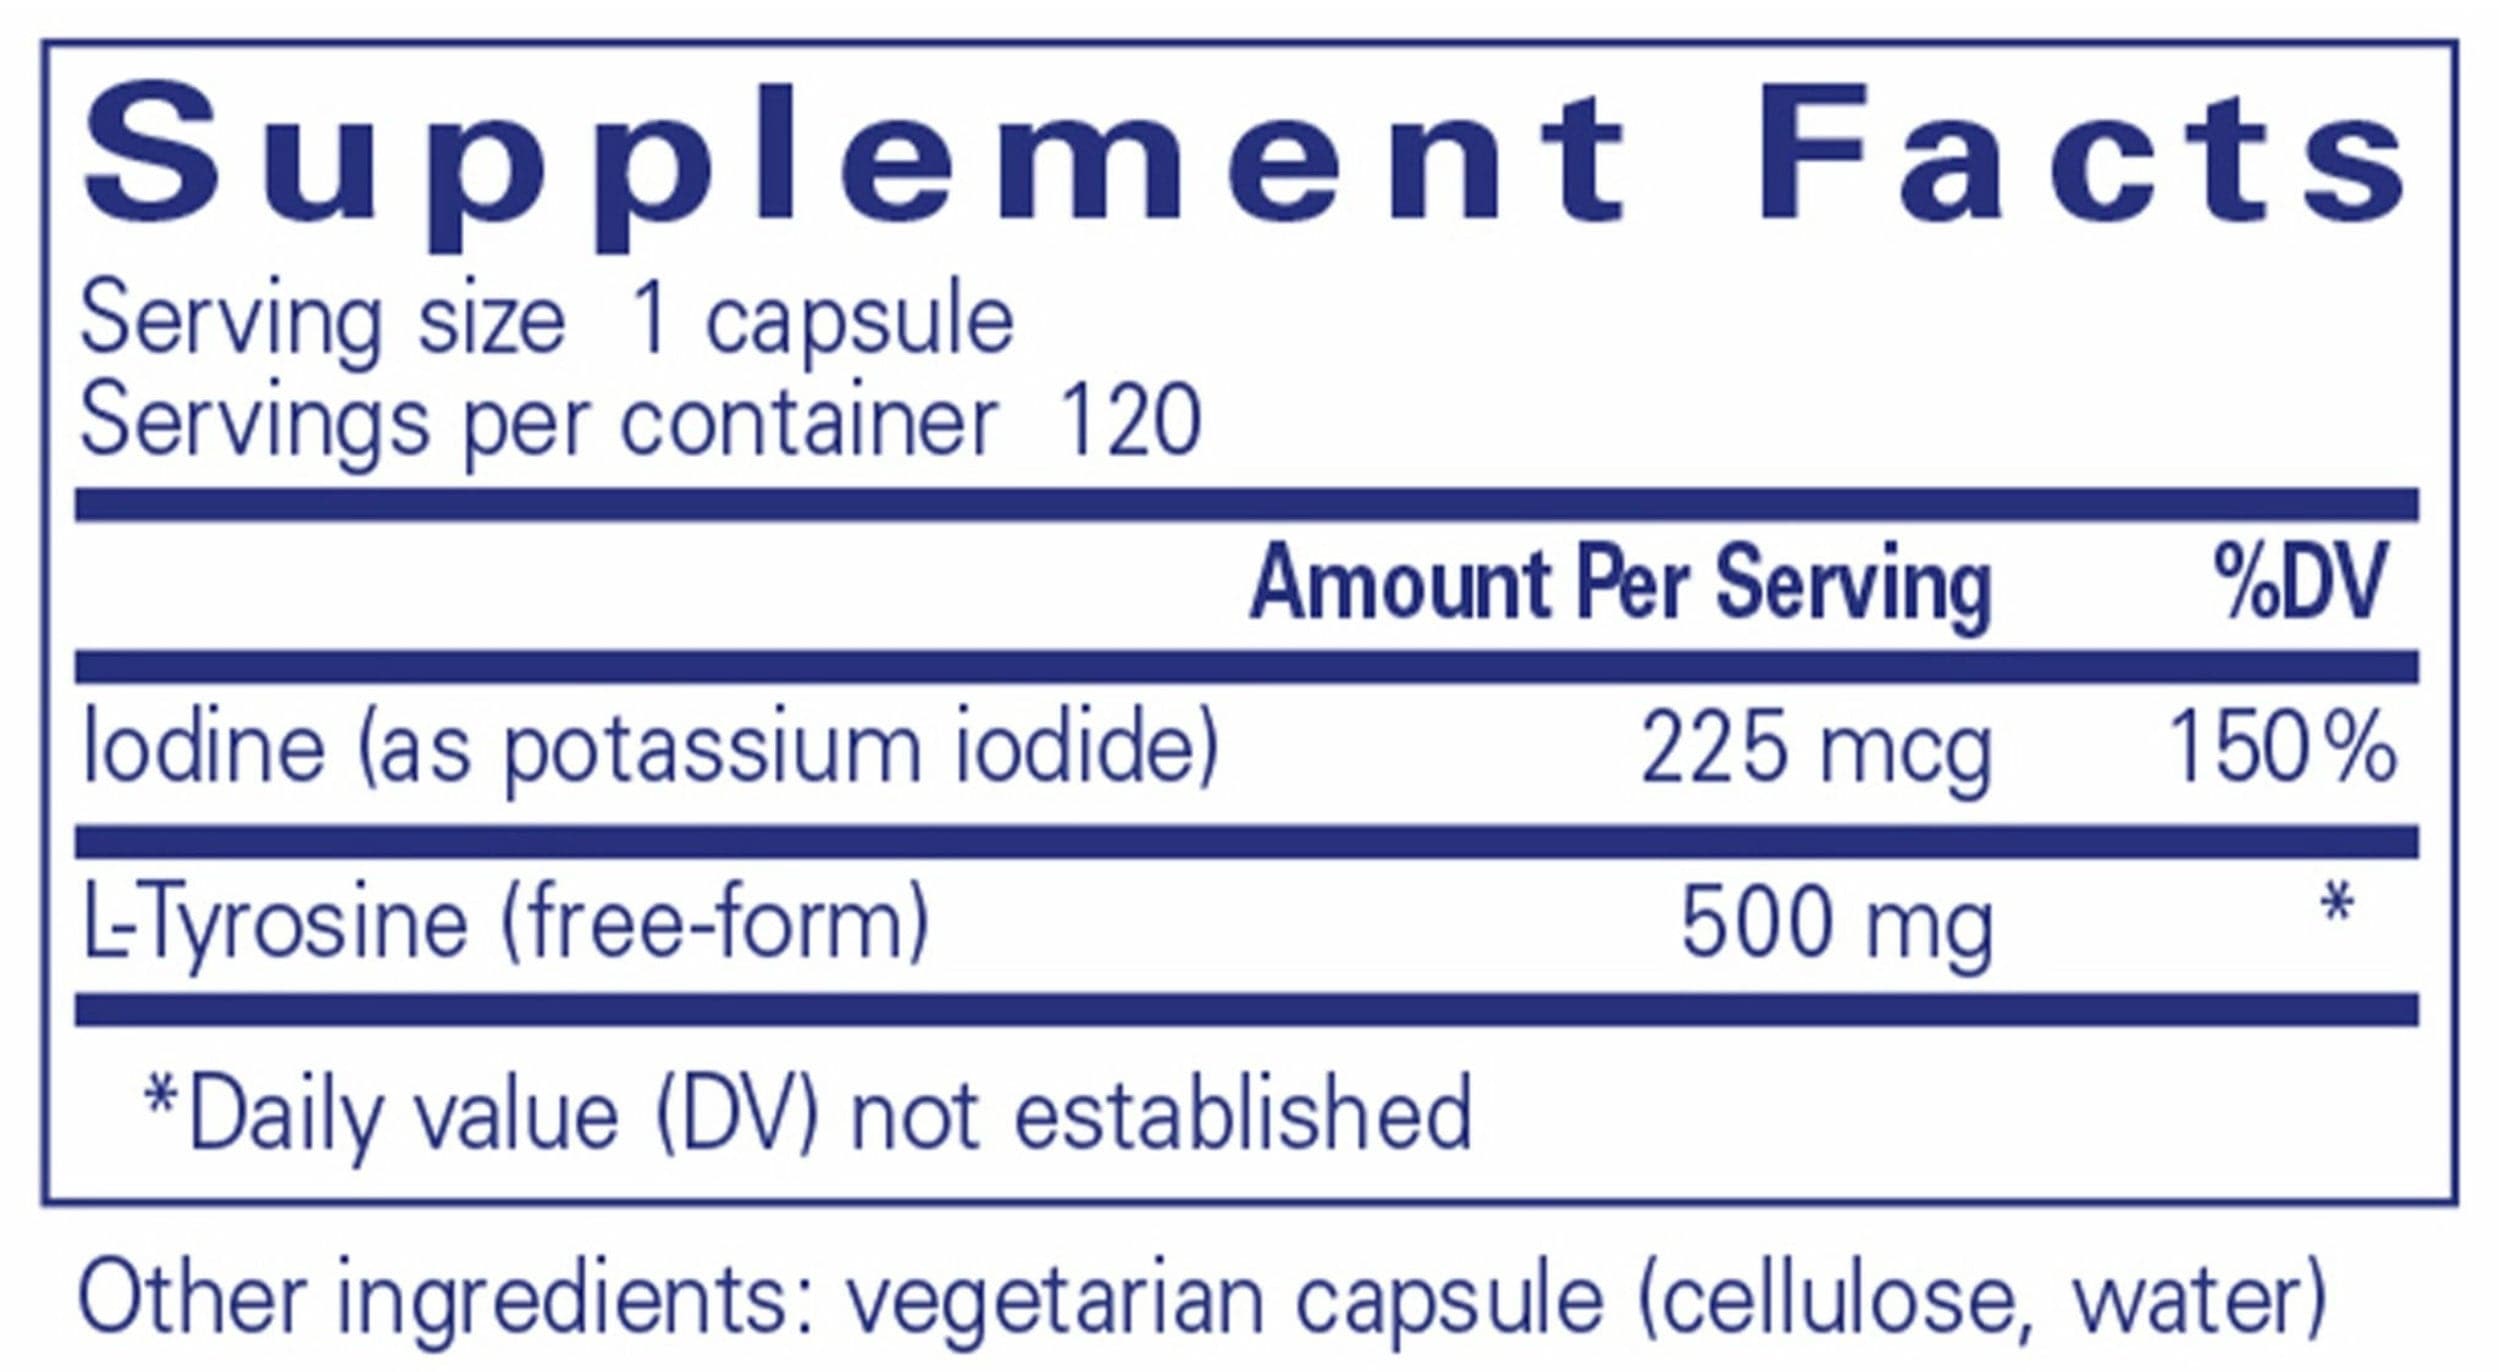 Pure Encapsulations Iodine and Tyrosine Ingredients 